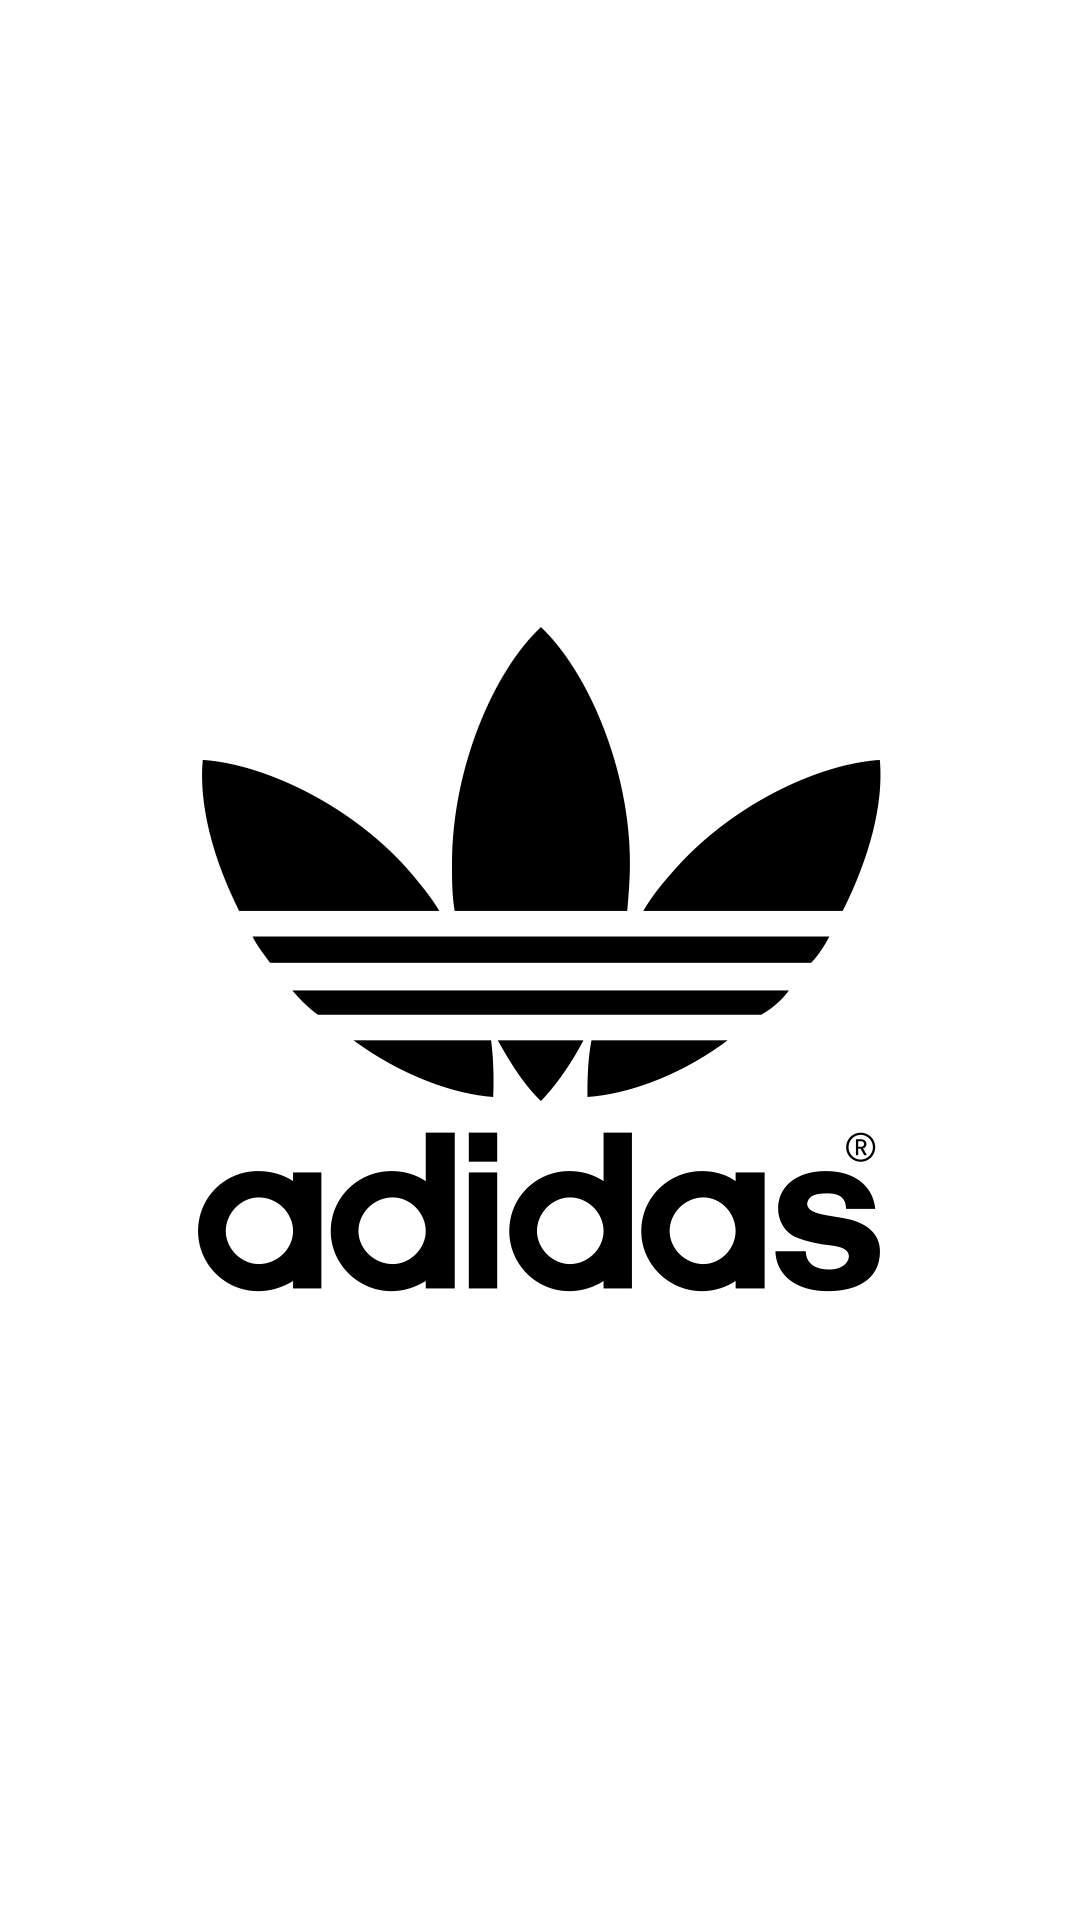  Adidas  Logos 